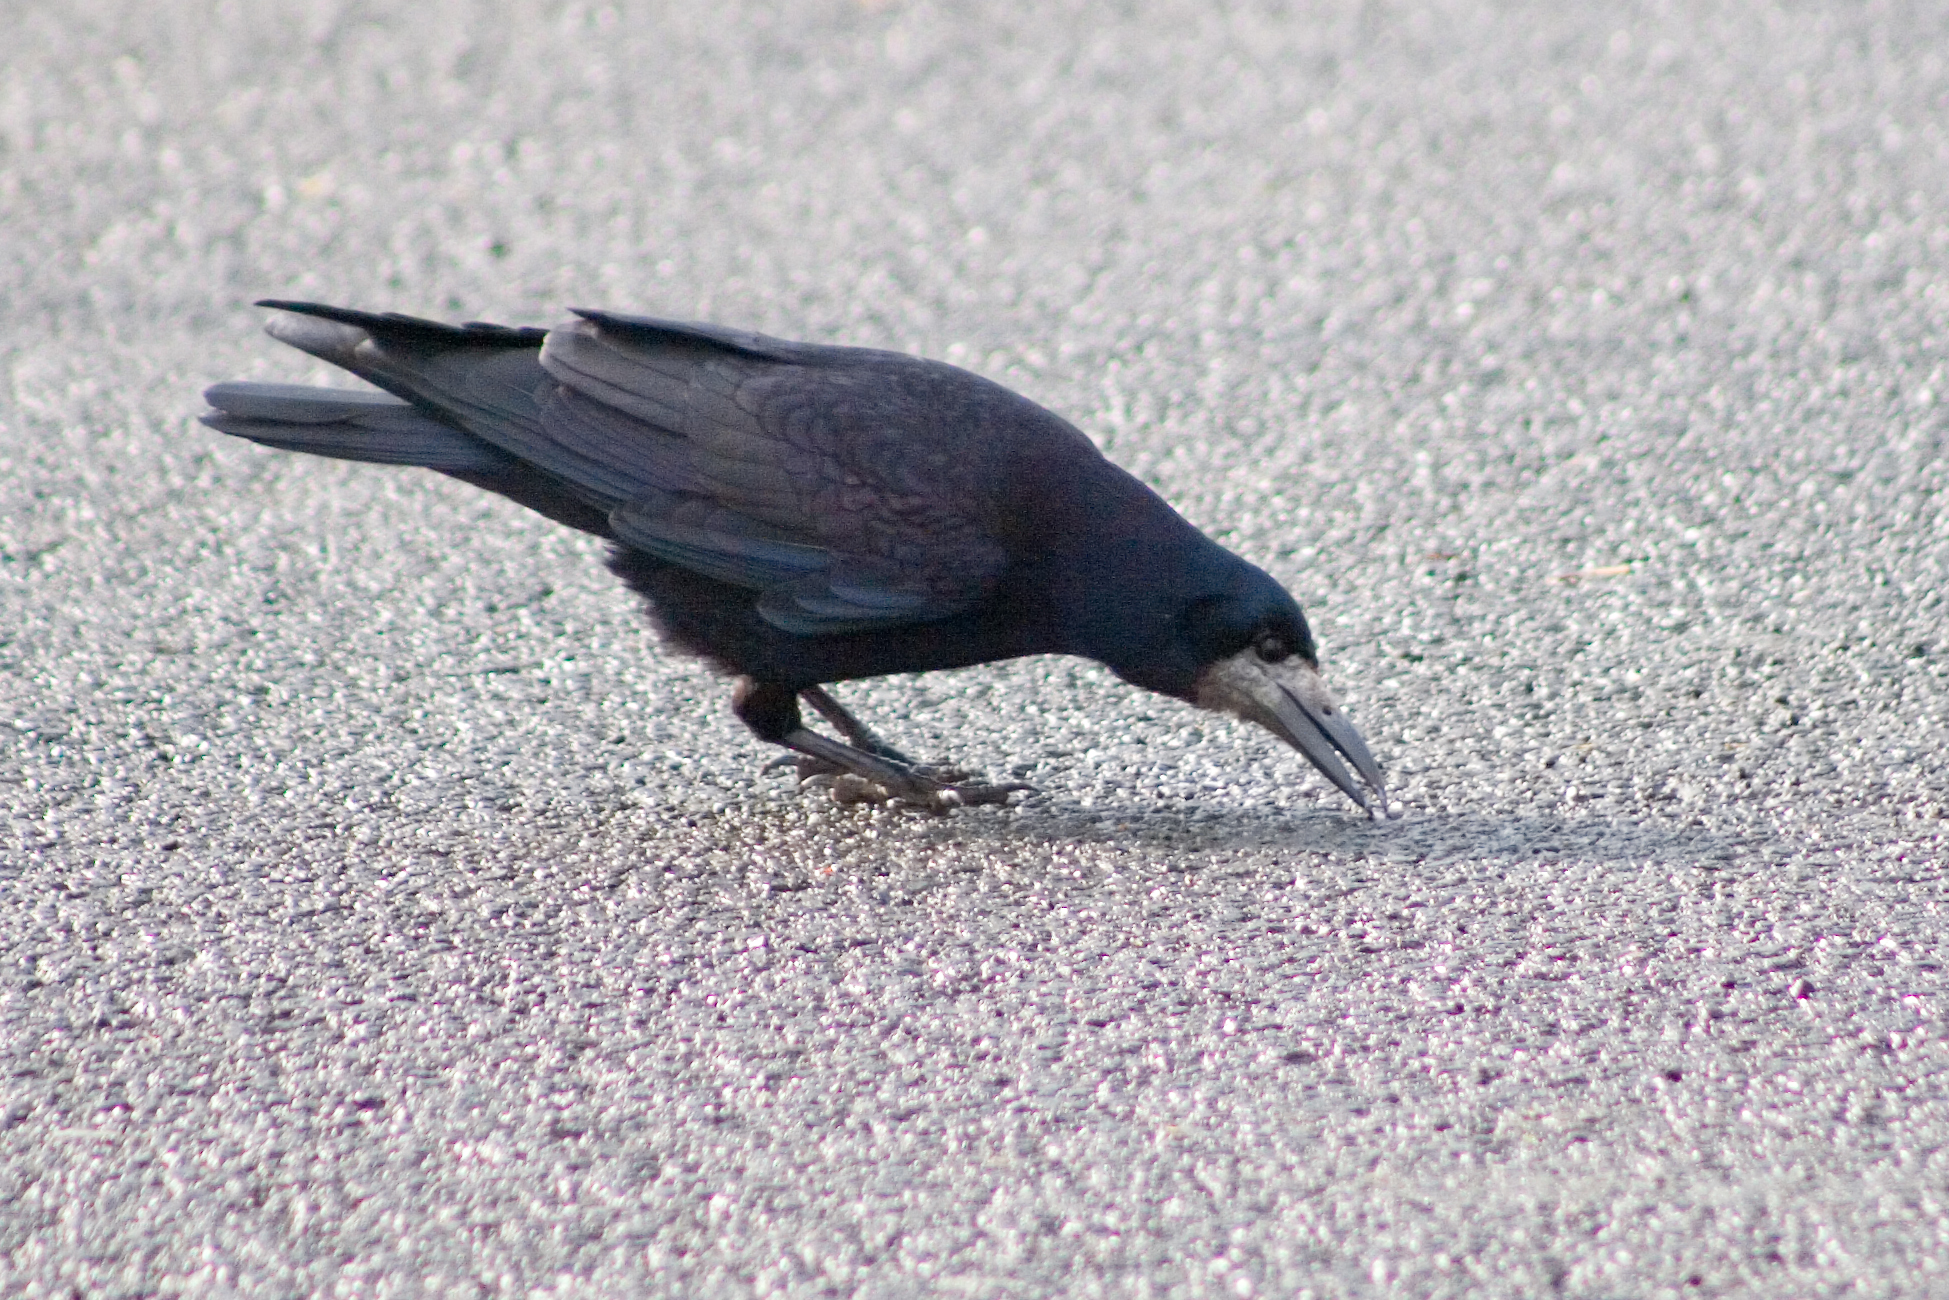 a black bird sitting on top of a sandy beach